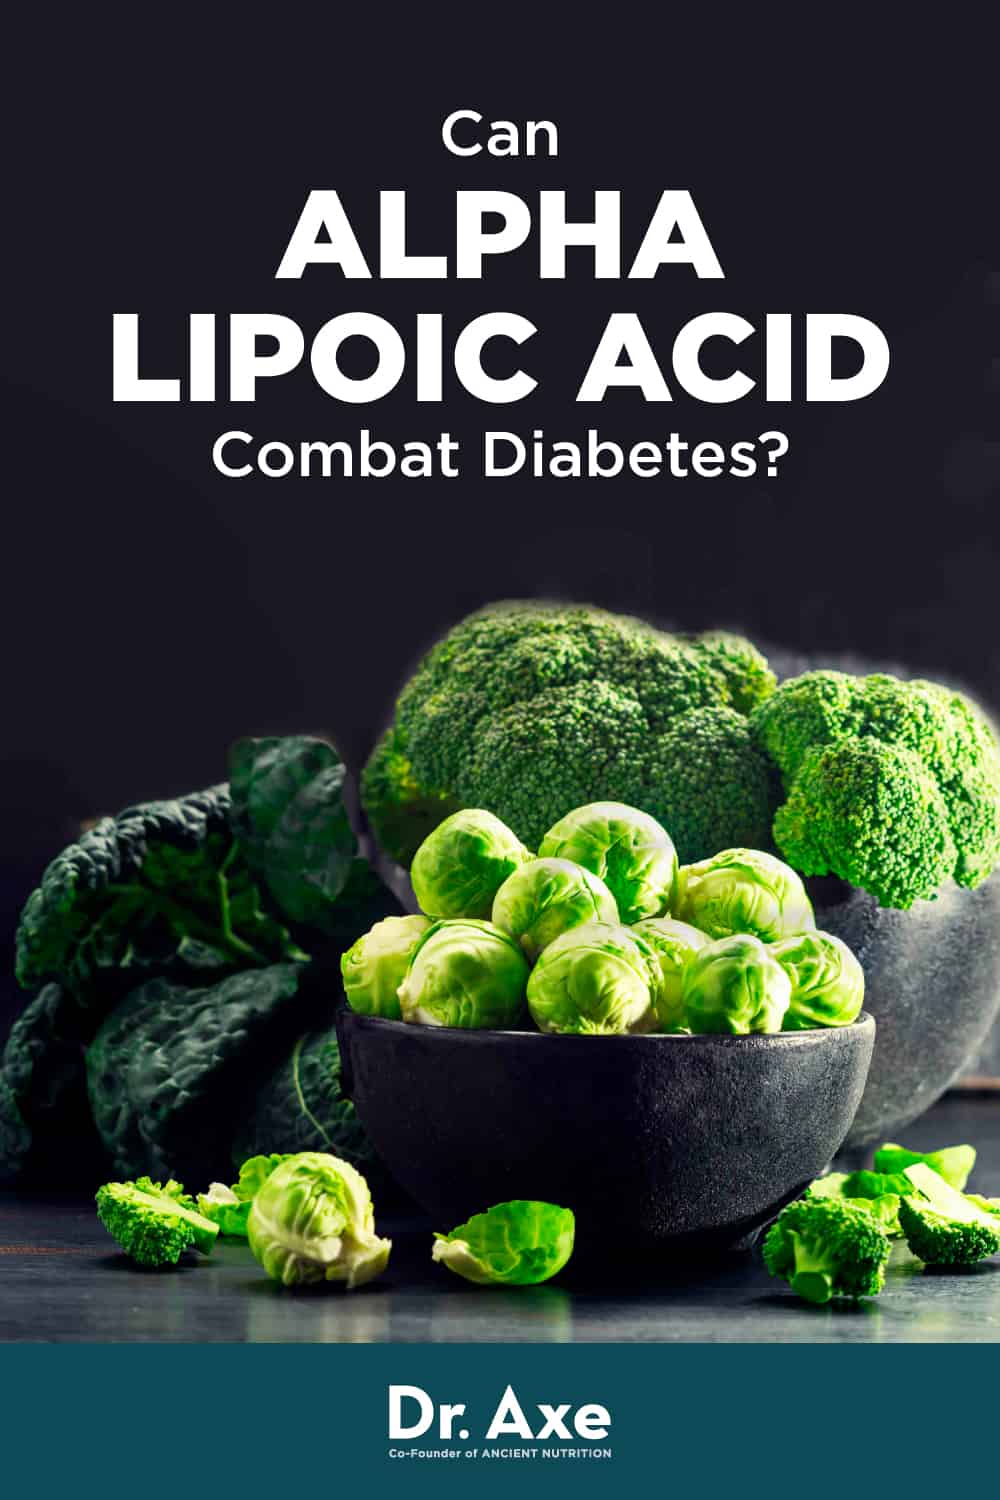 Health benefits of alpha lipoic acid